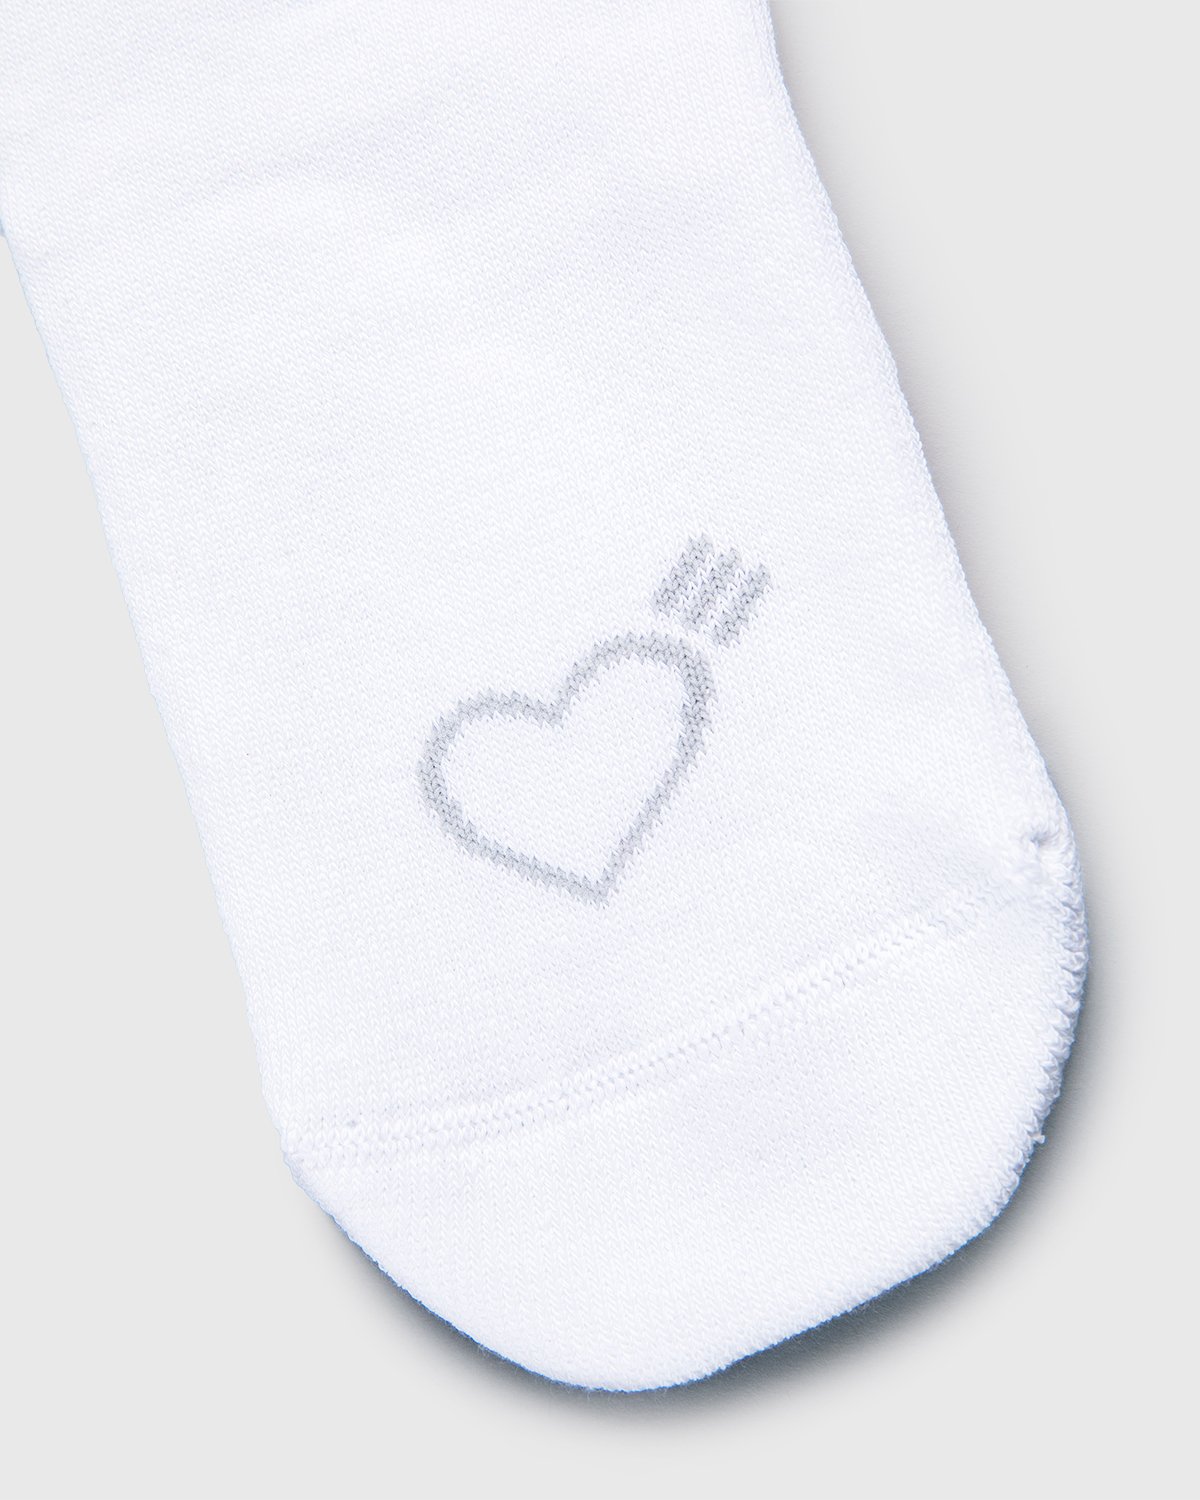 adidas Originals x Human Made - Socks White - Accessories - White - Image 5